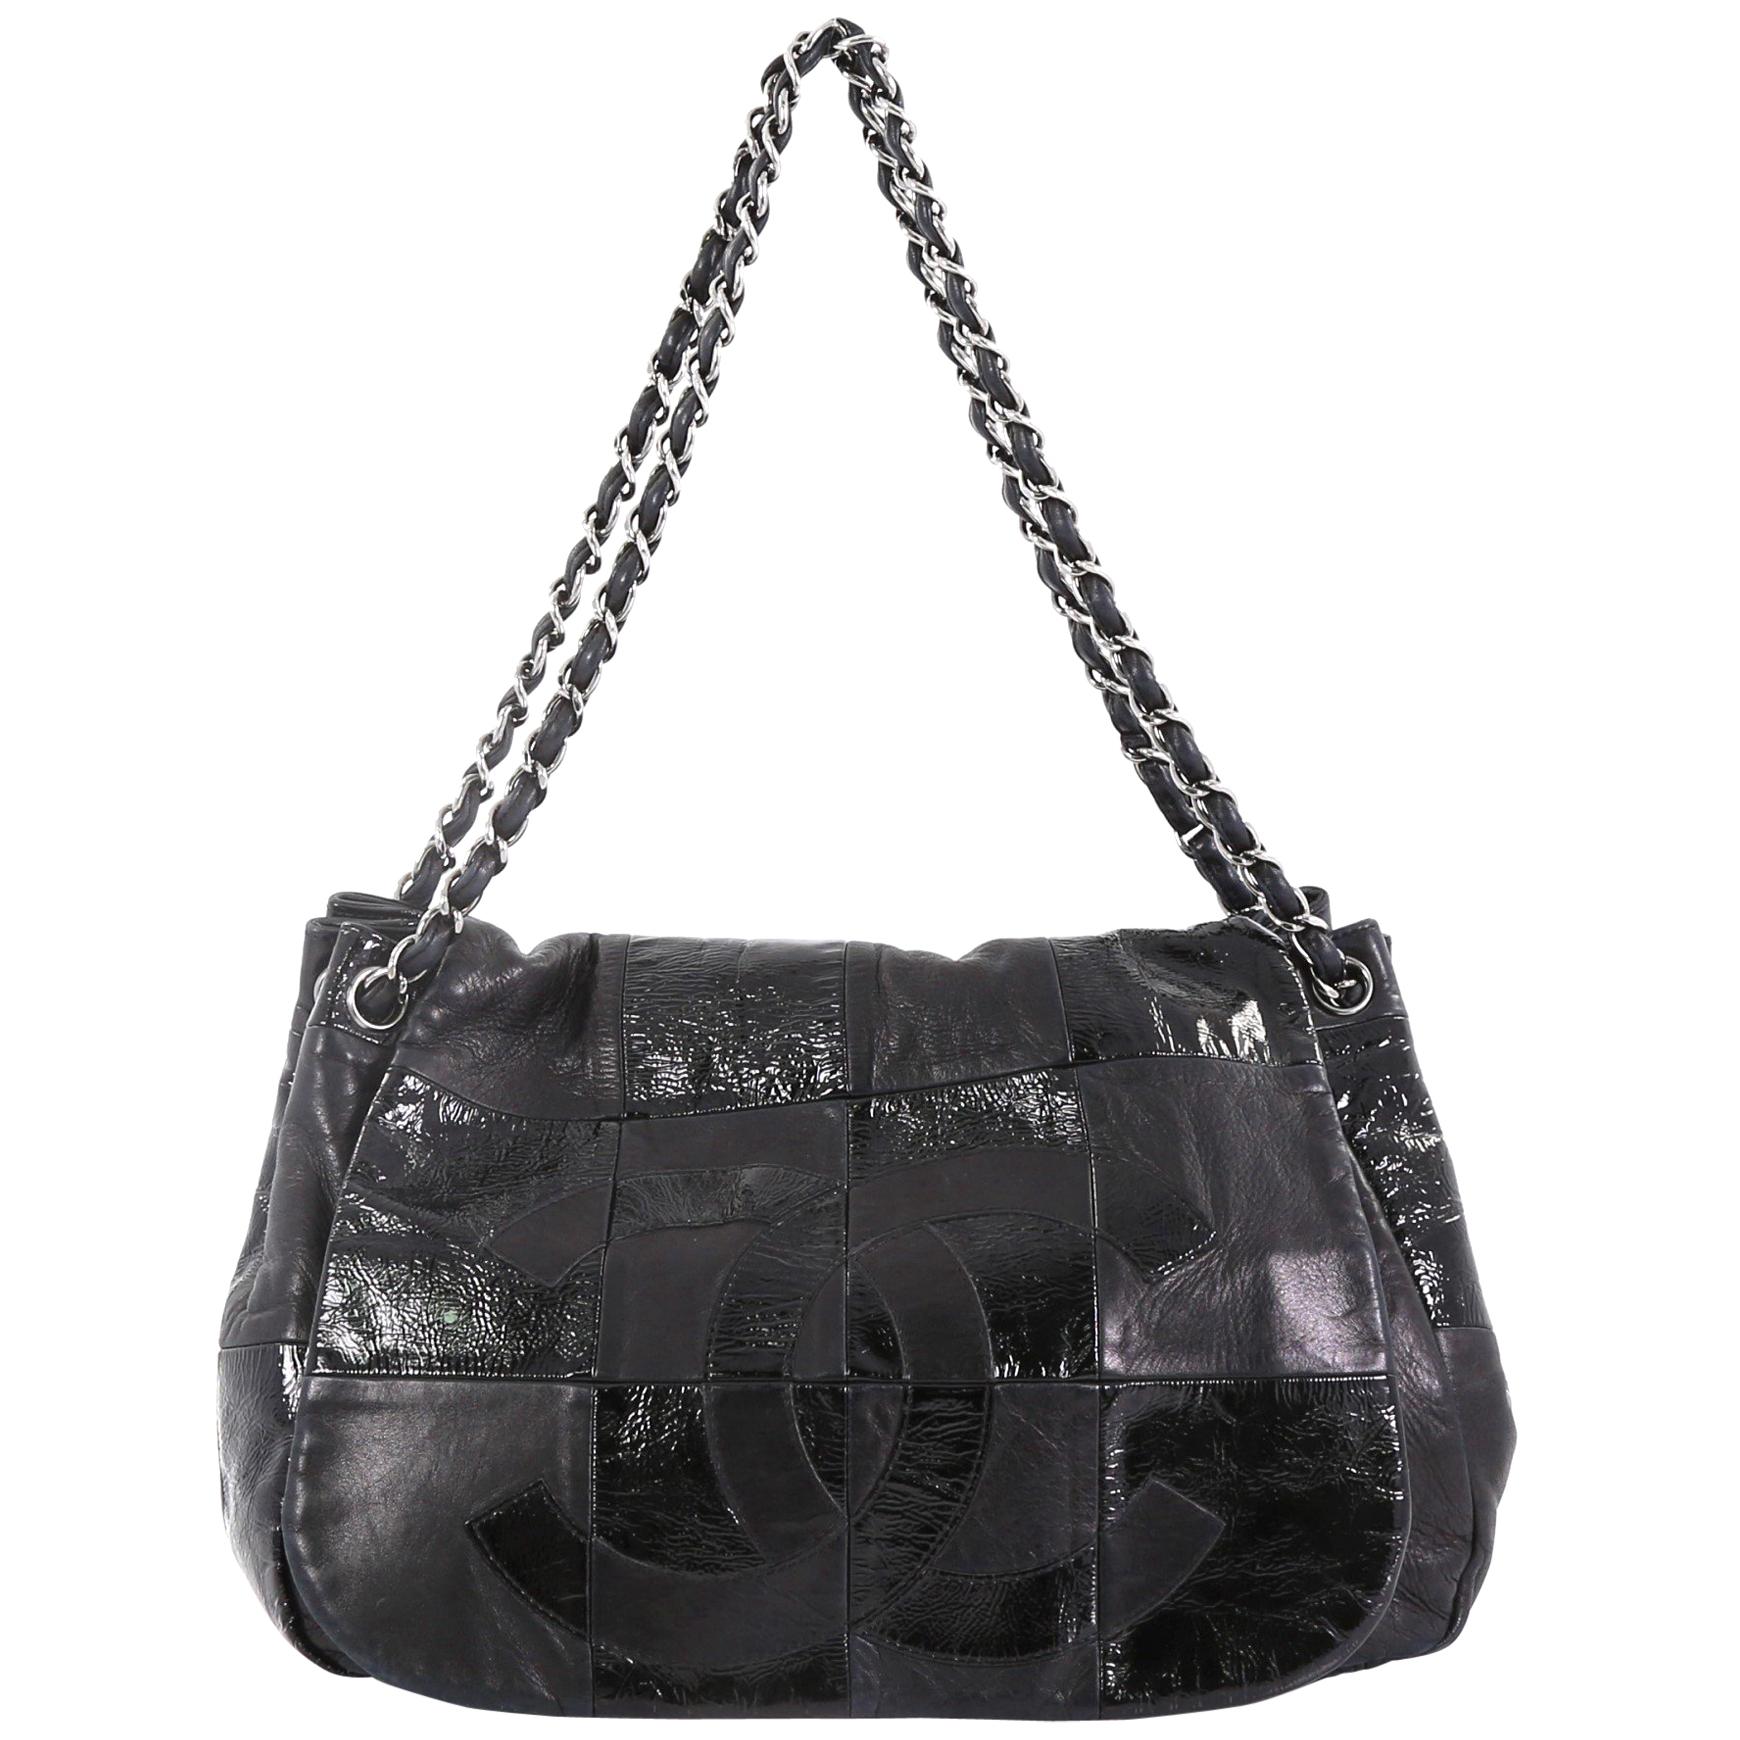 black white chanel handbag new